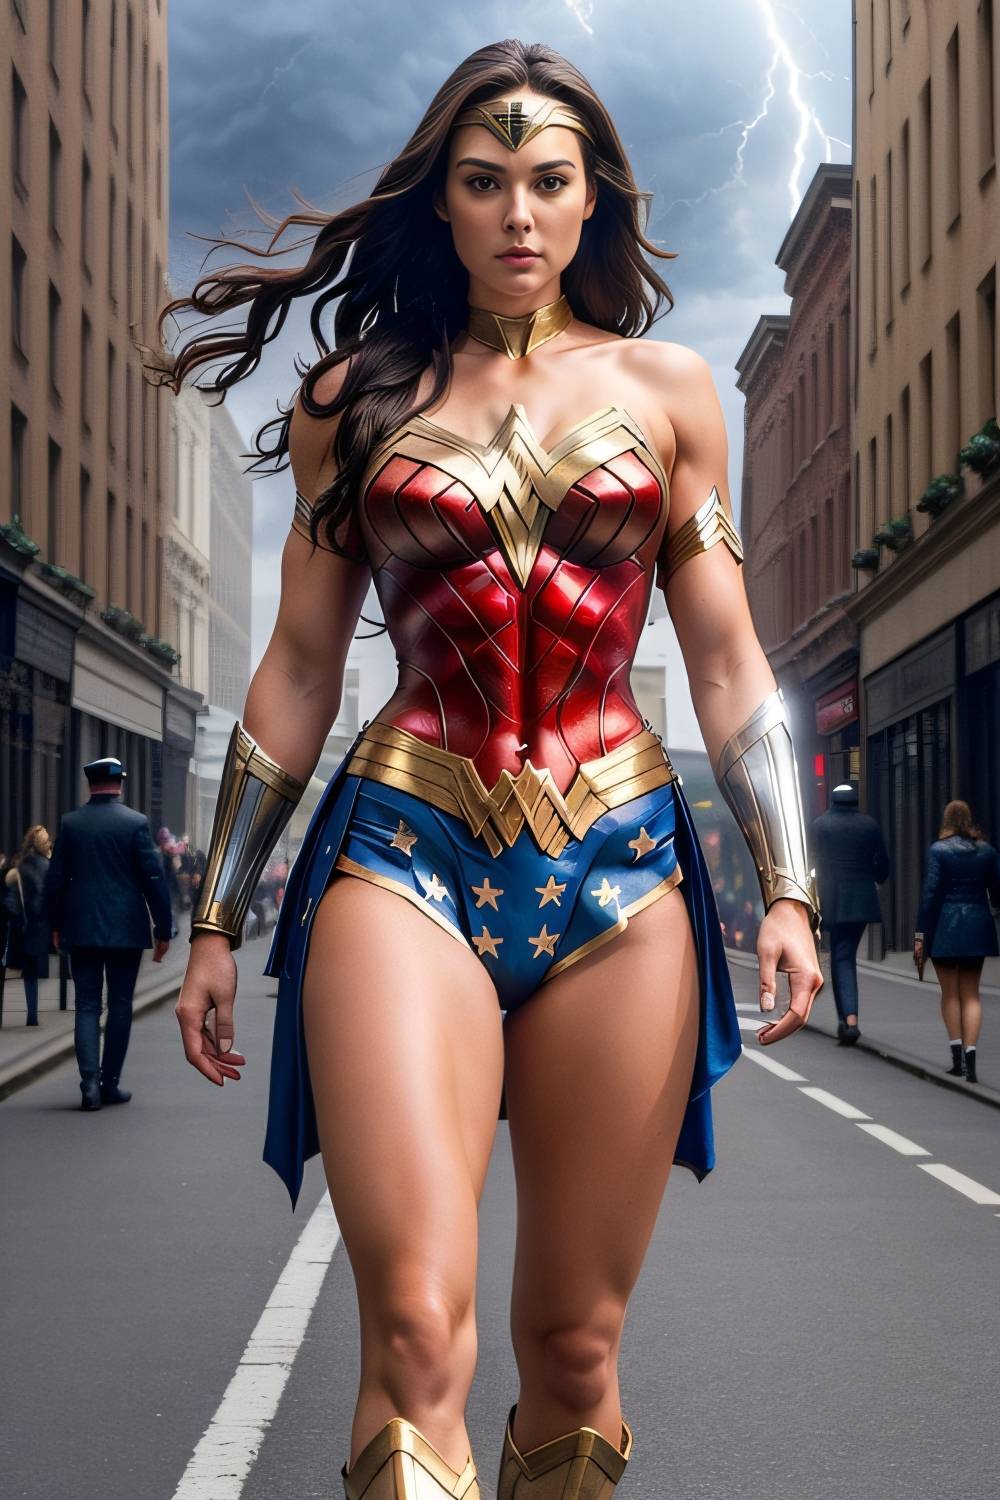 Wonder woman costume by Tallandstrong on DeviantArt